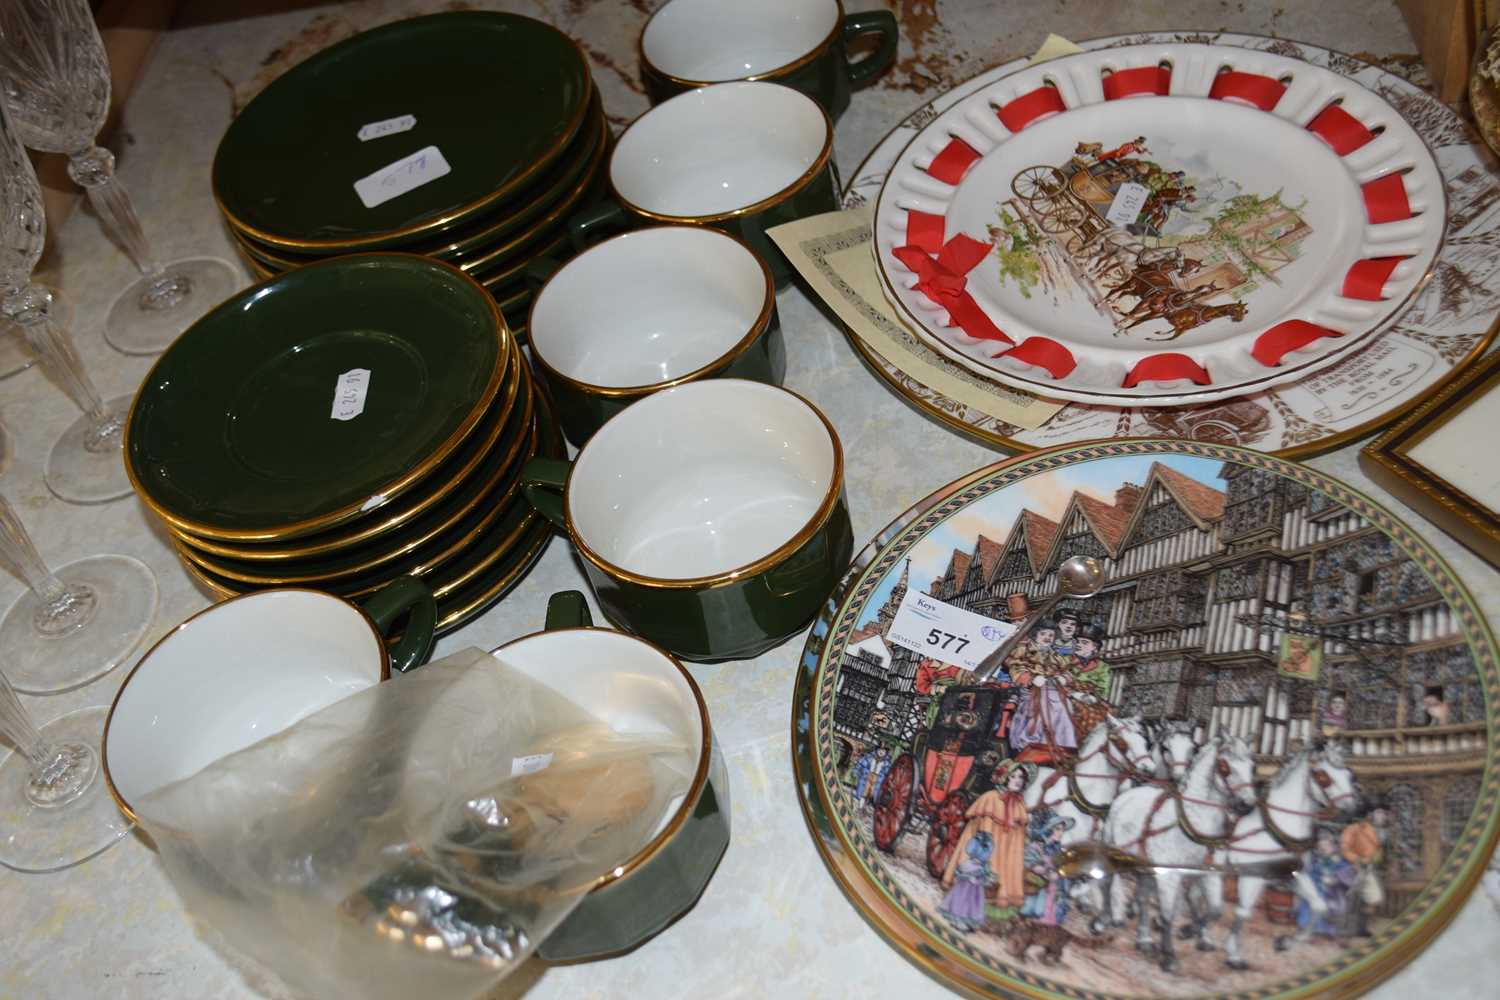 Mixed Lot: Green glazed tea wares, various decorated plates etc